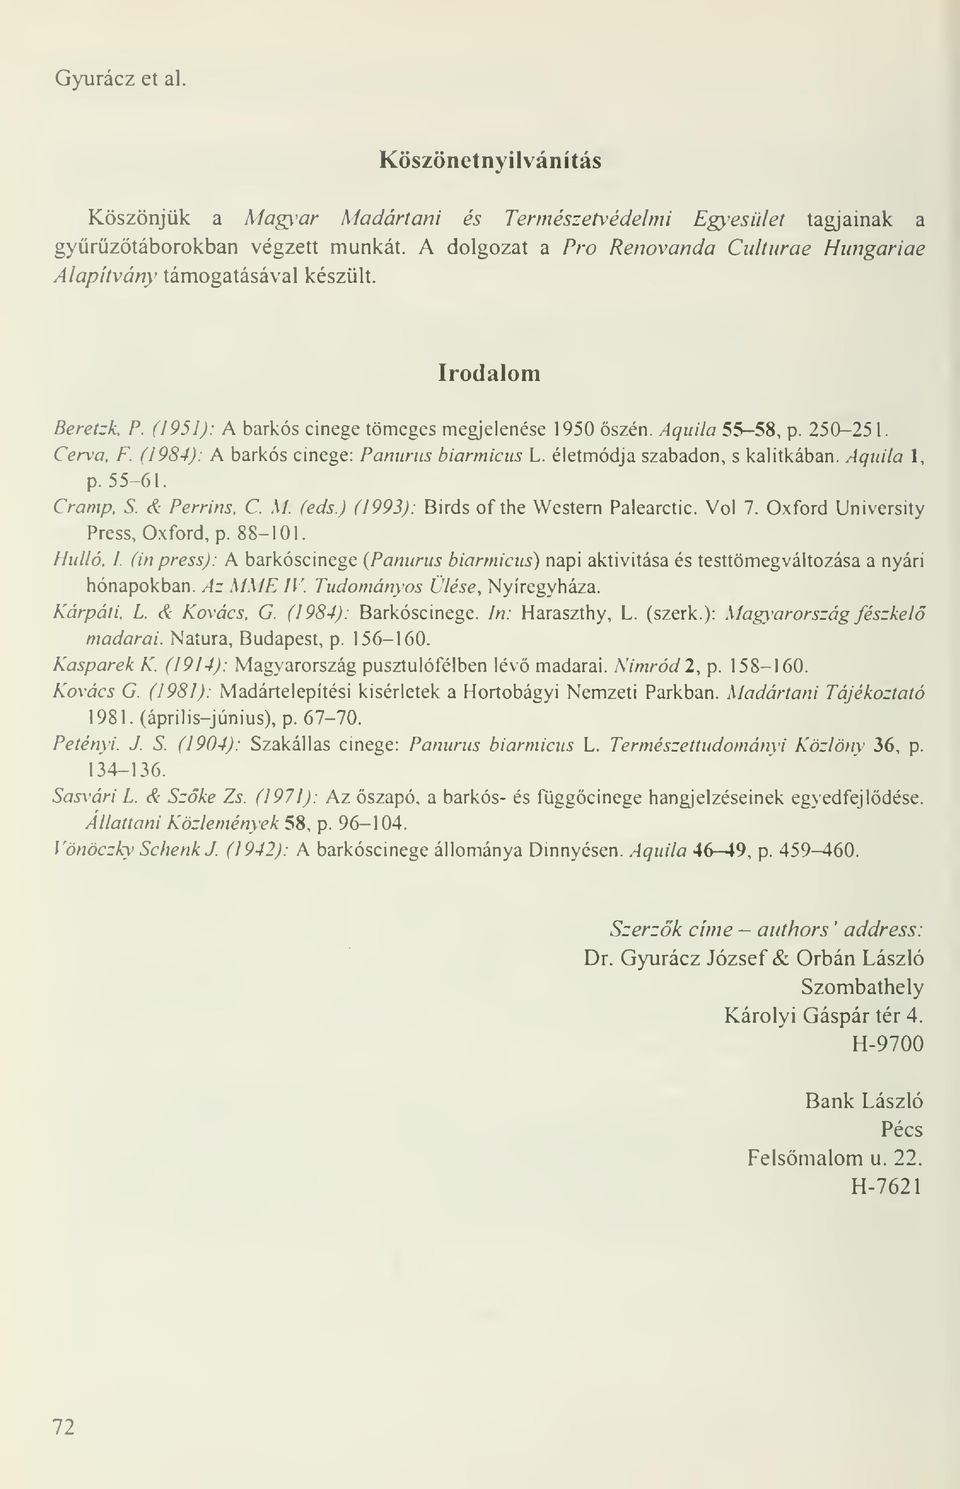 (1984): A barkós cinege: Panurus biarmicus L. életmódja szabadon, s kalitkában. Aquila 1, p. 55-61. Cramp, S. & Perrins, C M. (eds.) (1993): Birds of the Western Palearctic. Vol 7.